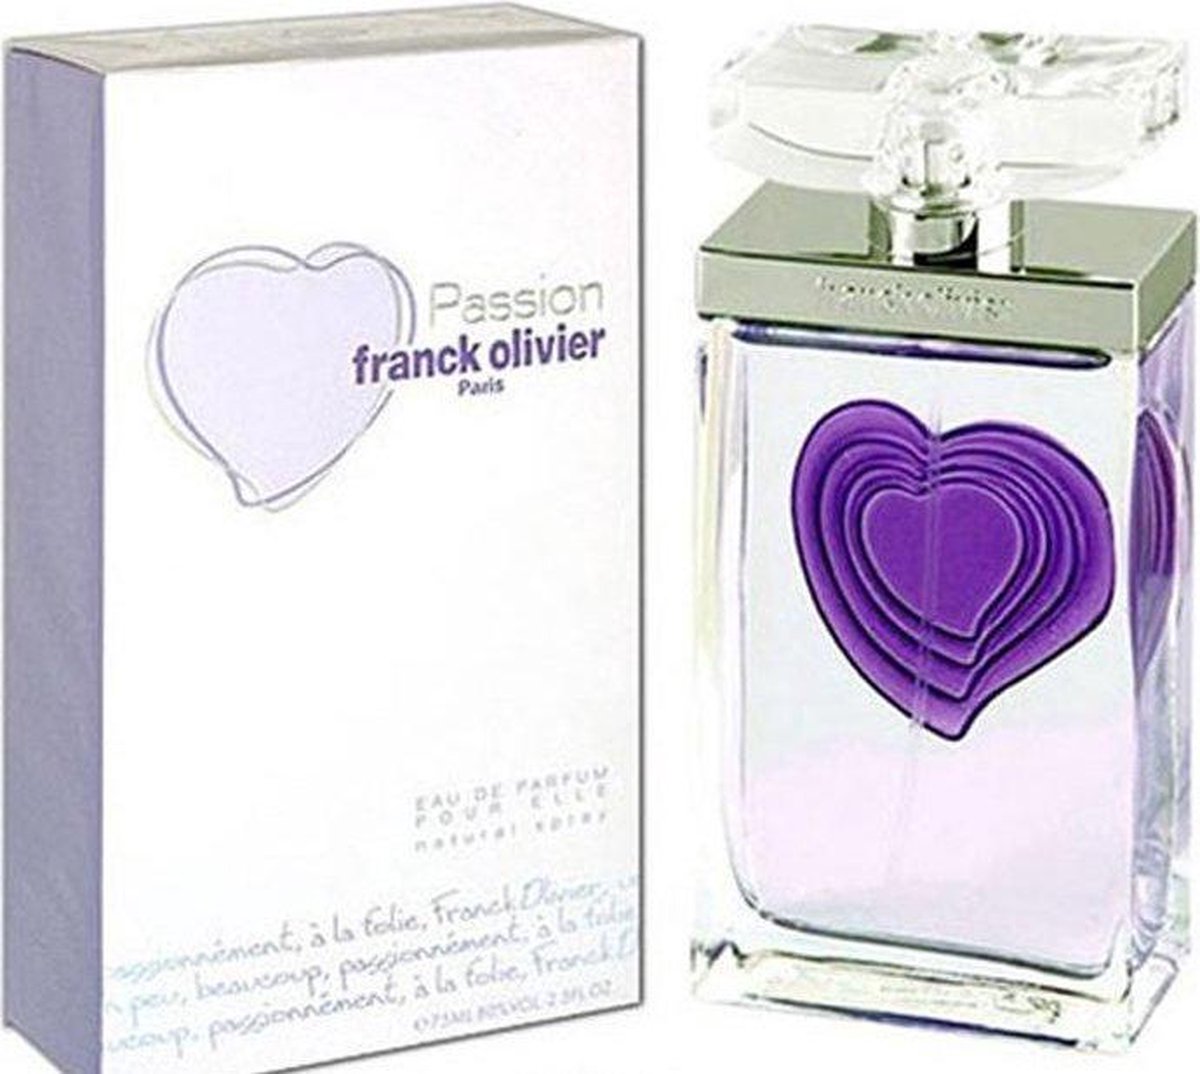 Franck Olivier Eau De Parfum Passion 75 ml - Voor Vrouwen